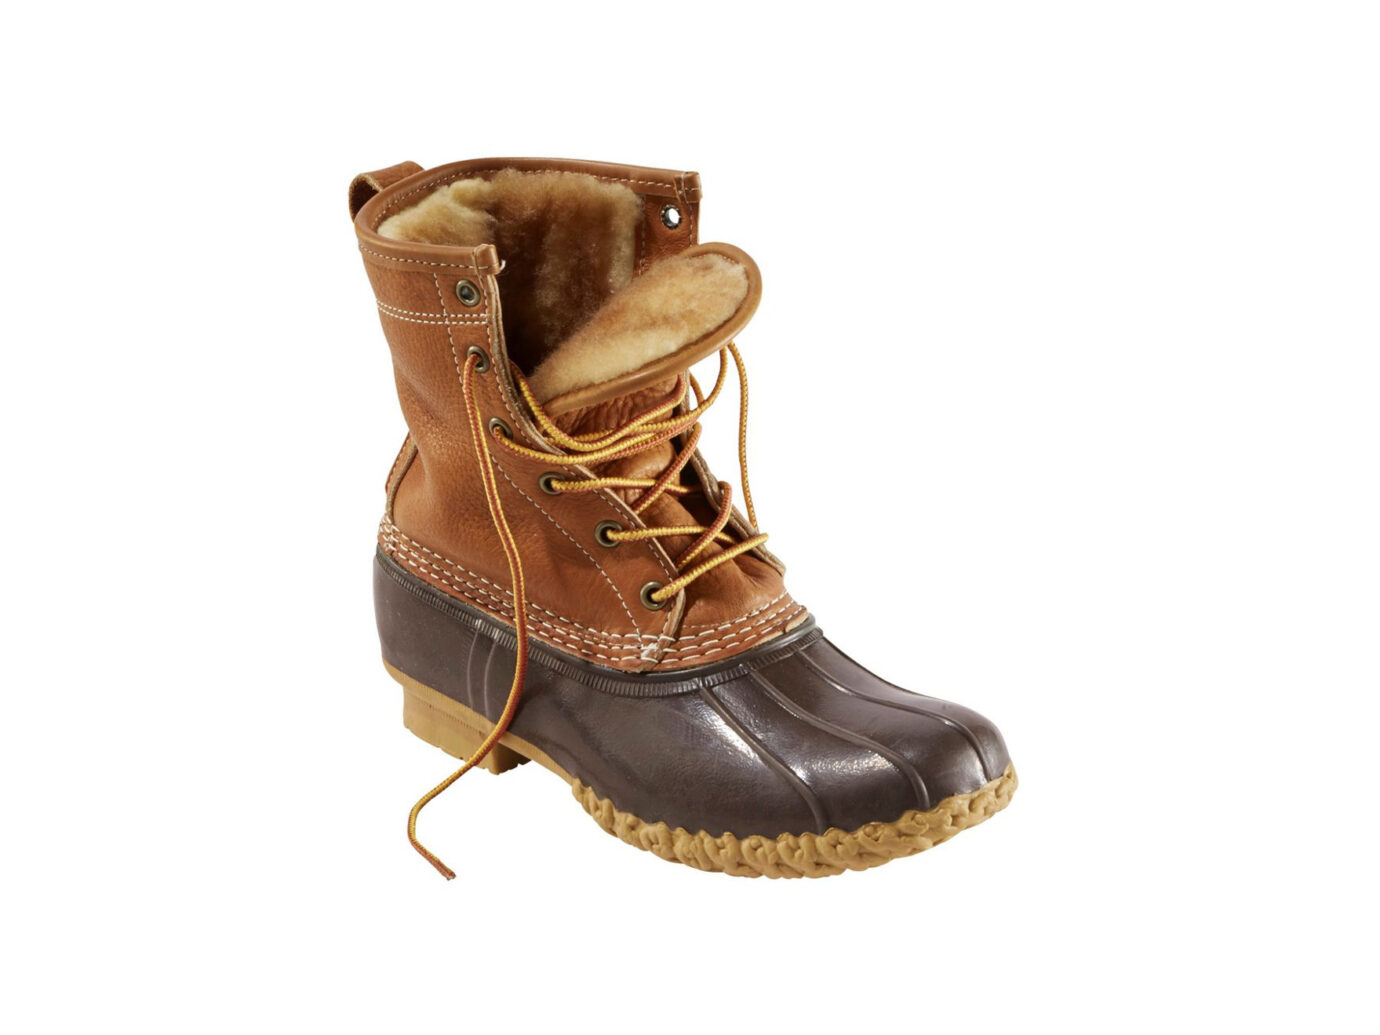 Mens Winter Snow Boots Waterproof Men's Anti-Slip Warm Fur Winter Boots  Lace-up Shoes for Outdoor Indoor | Wish